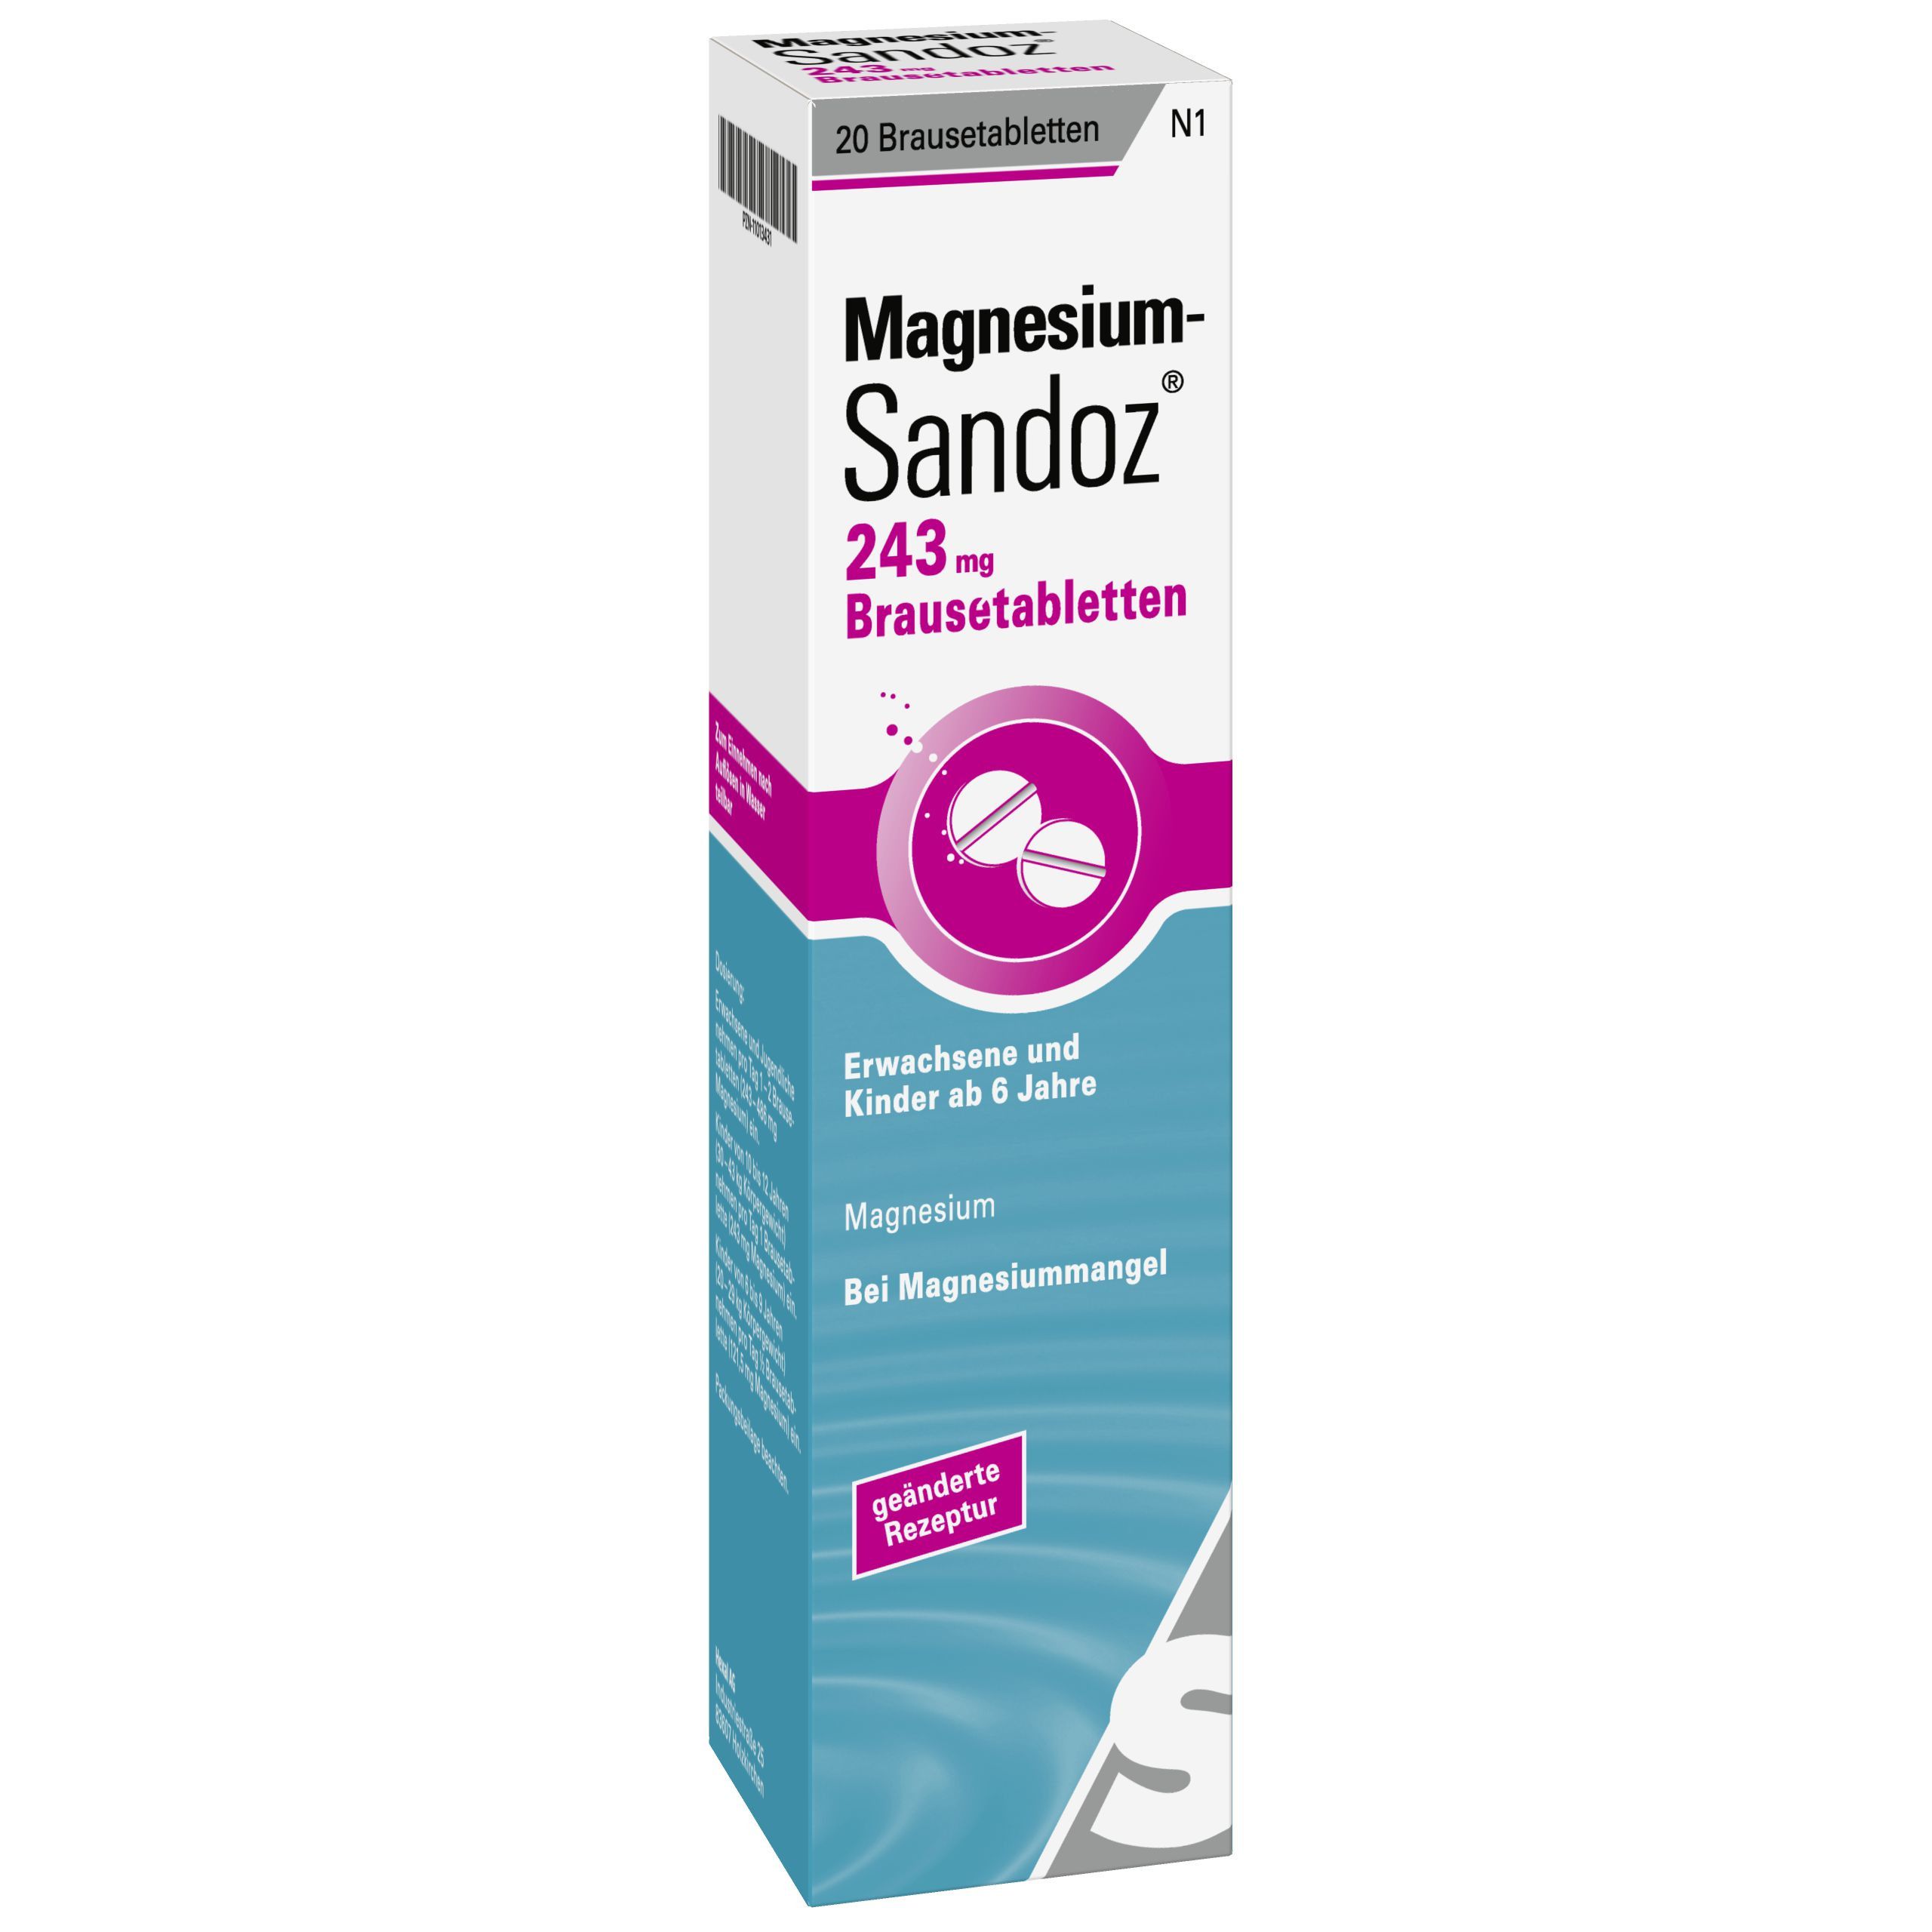 Magnesium-Sandoz® 243 mg